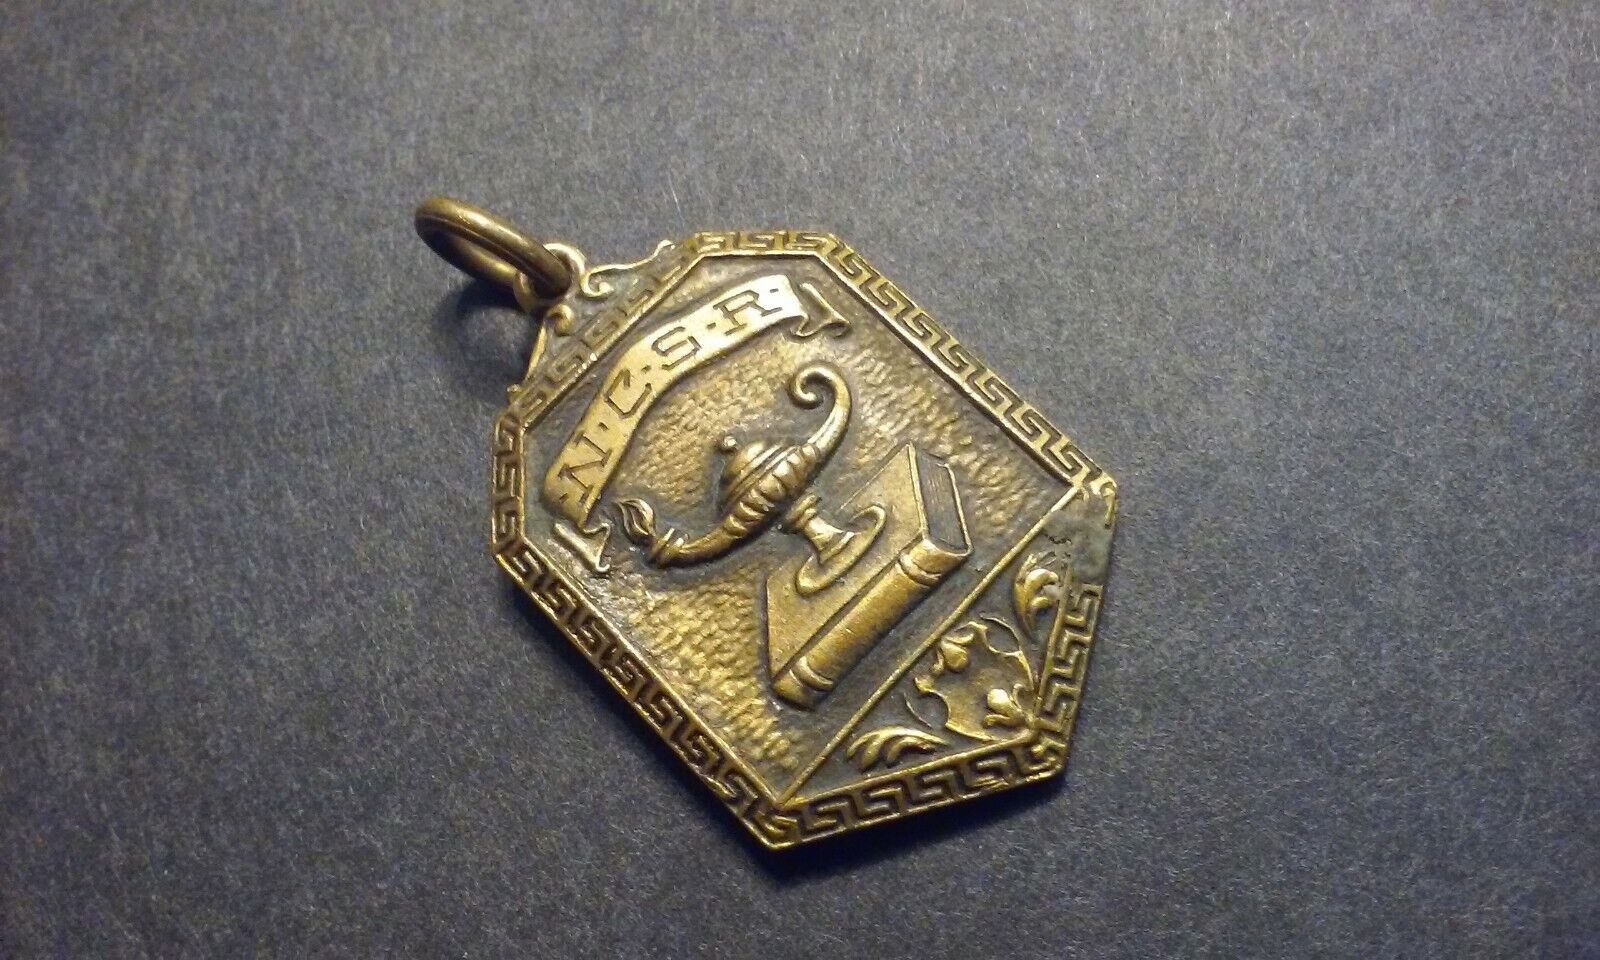 Vintage Award Brass Ornate Medal Pendant 1935 Cum Laude Latin Tournament N.C.R.S